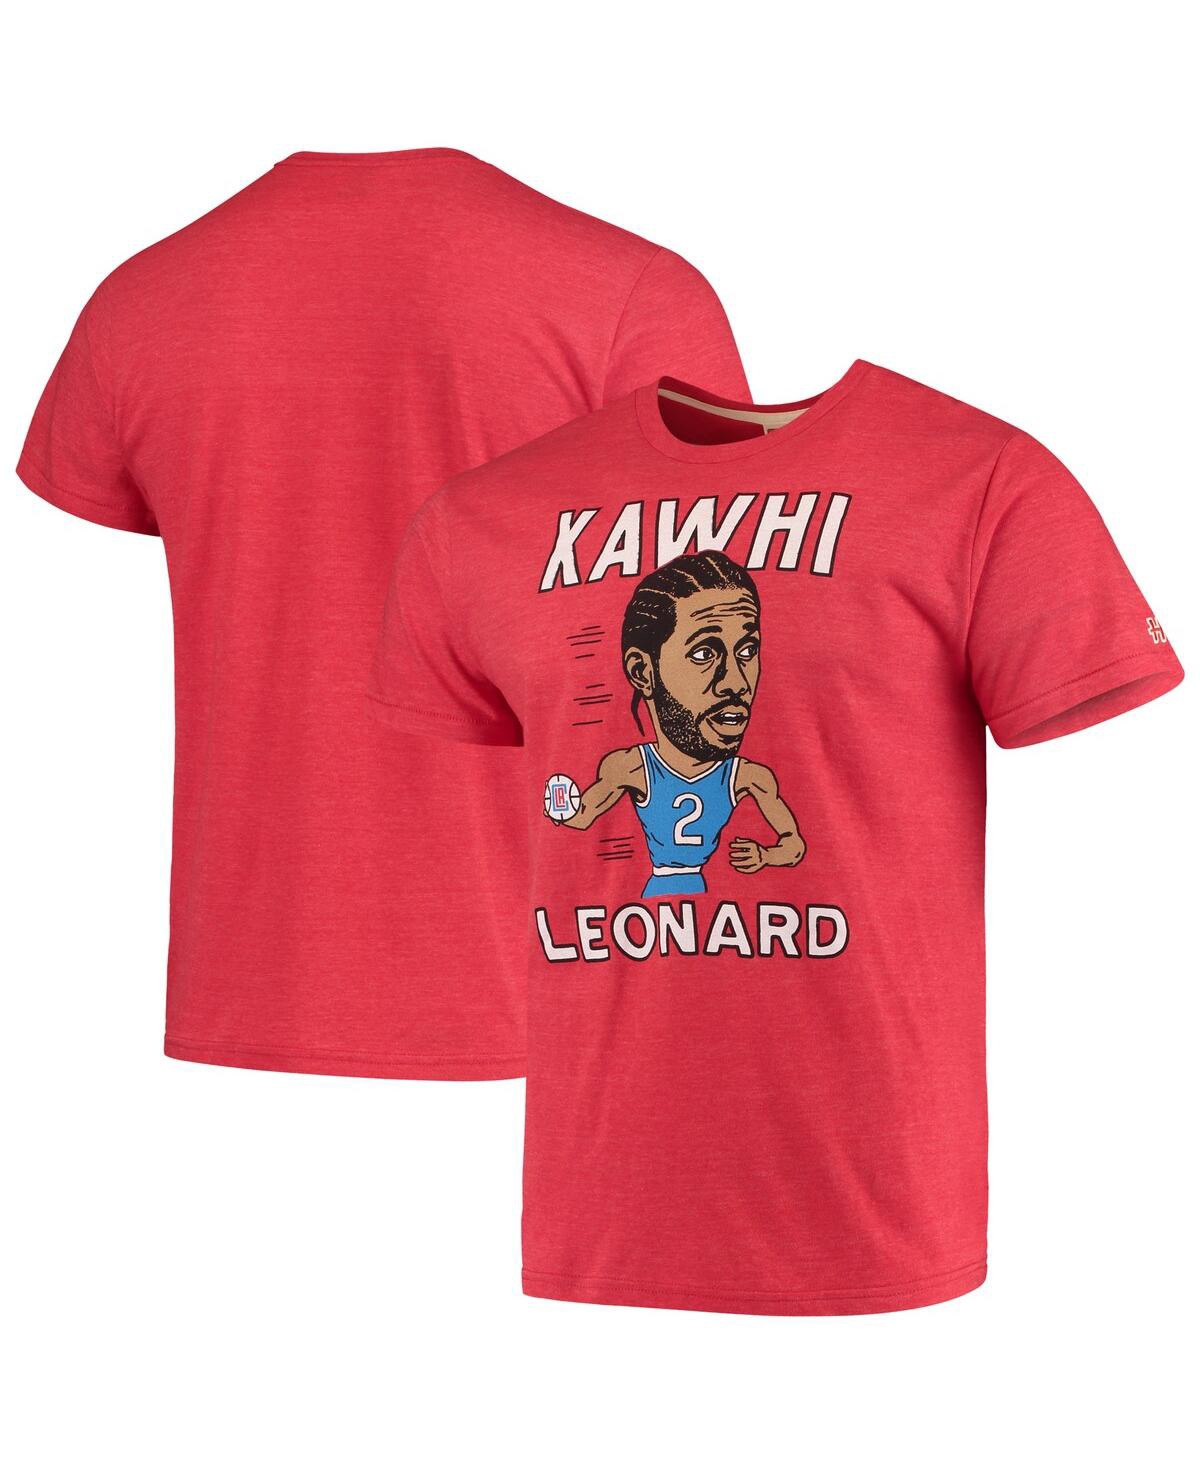 Men's Kawhi Leonard Red La Clippers Caricature Tri-Blend T-shirt - Red